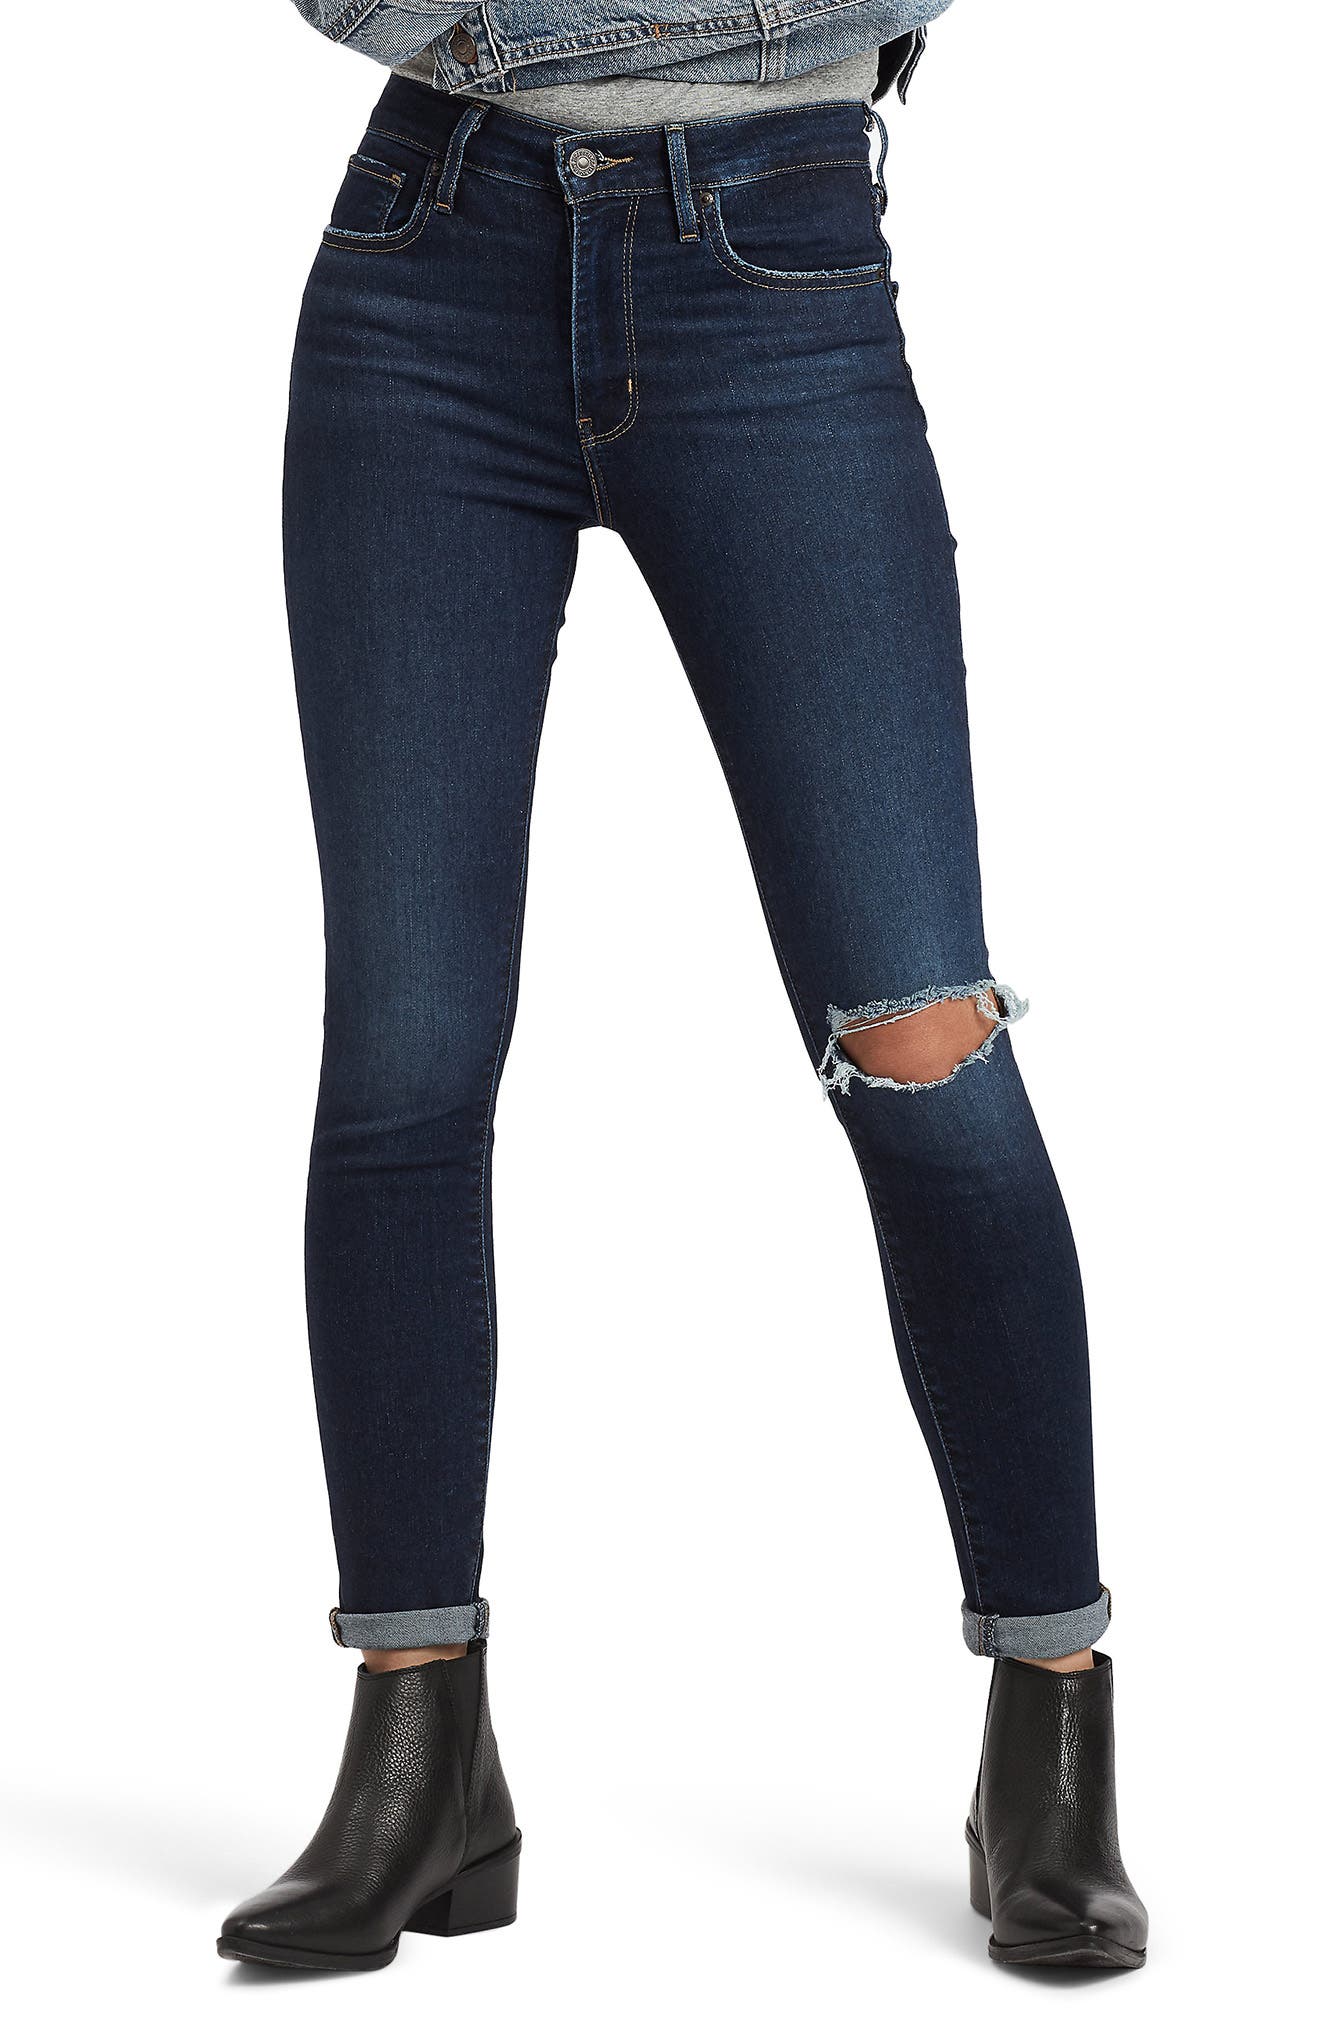 levi's 721 high waisted skinny jeans